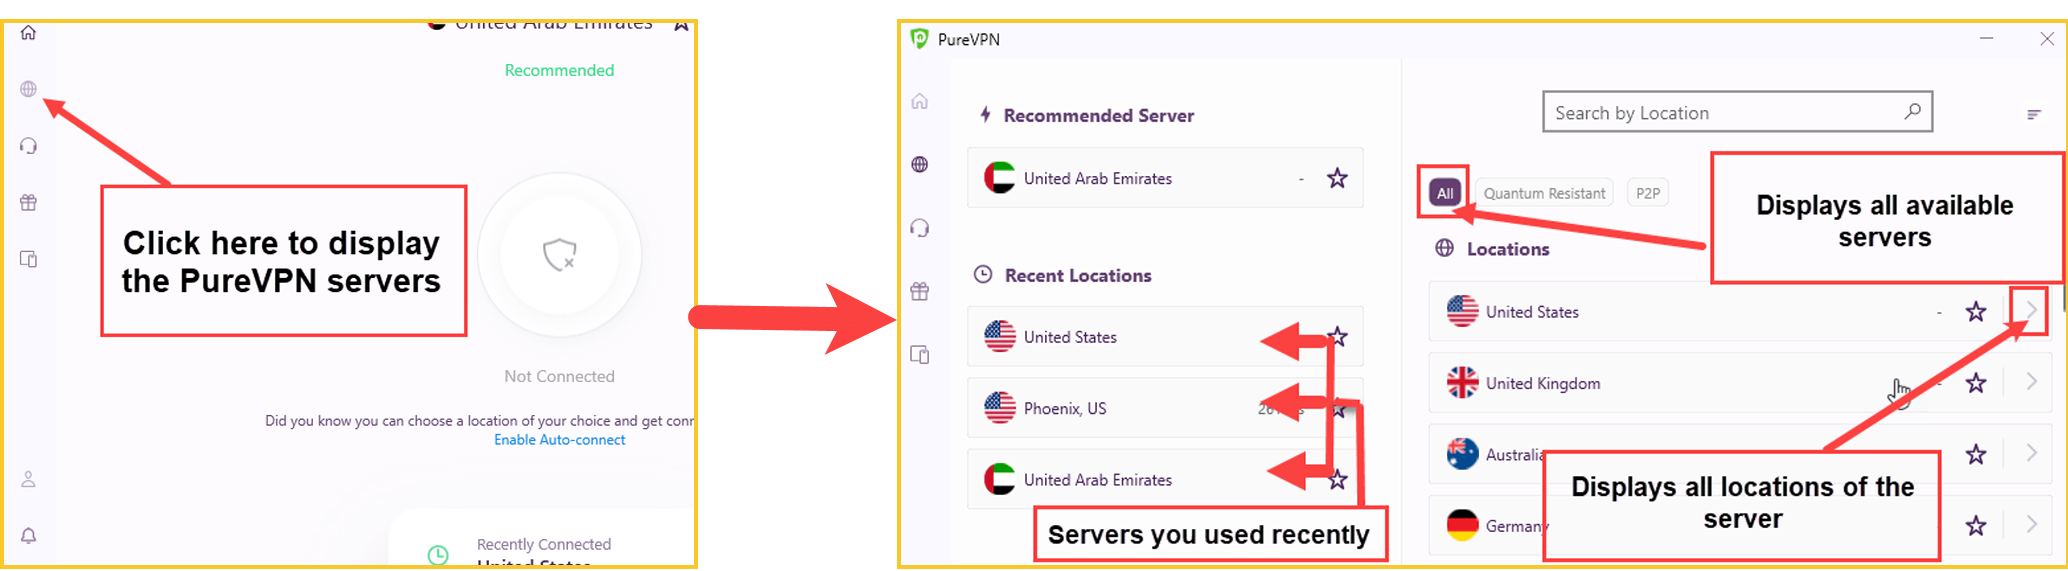 purevpn-server-locations-interface-in-Australia